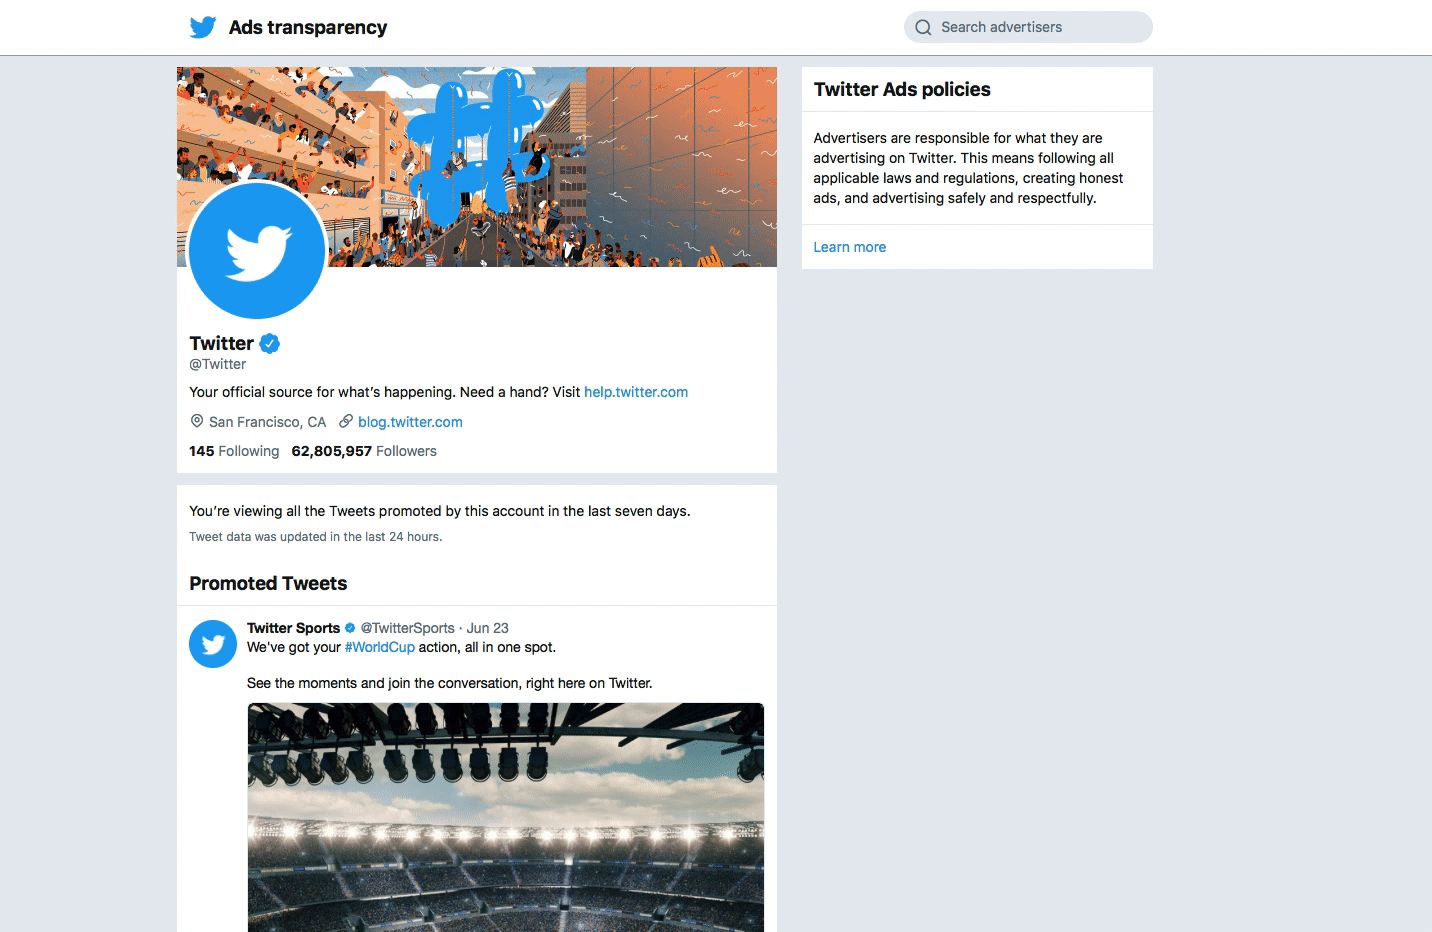 Twitter Sets Up Ads Transparency Center 1 | Digital Marketing Community